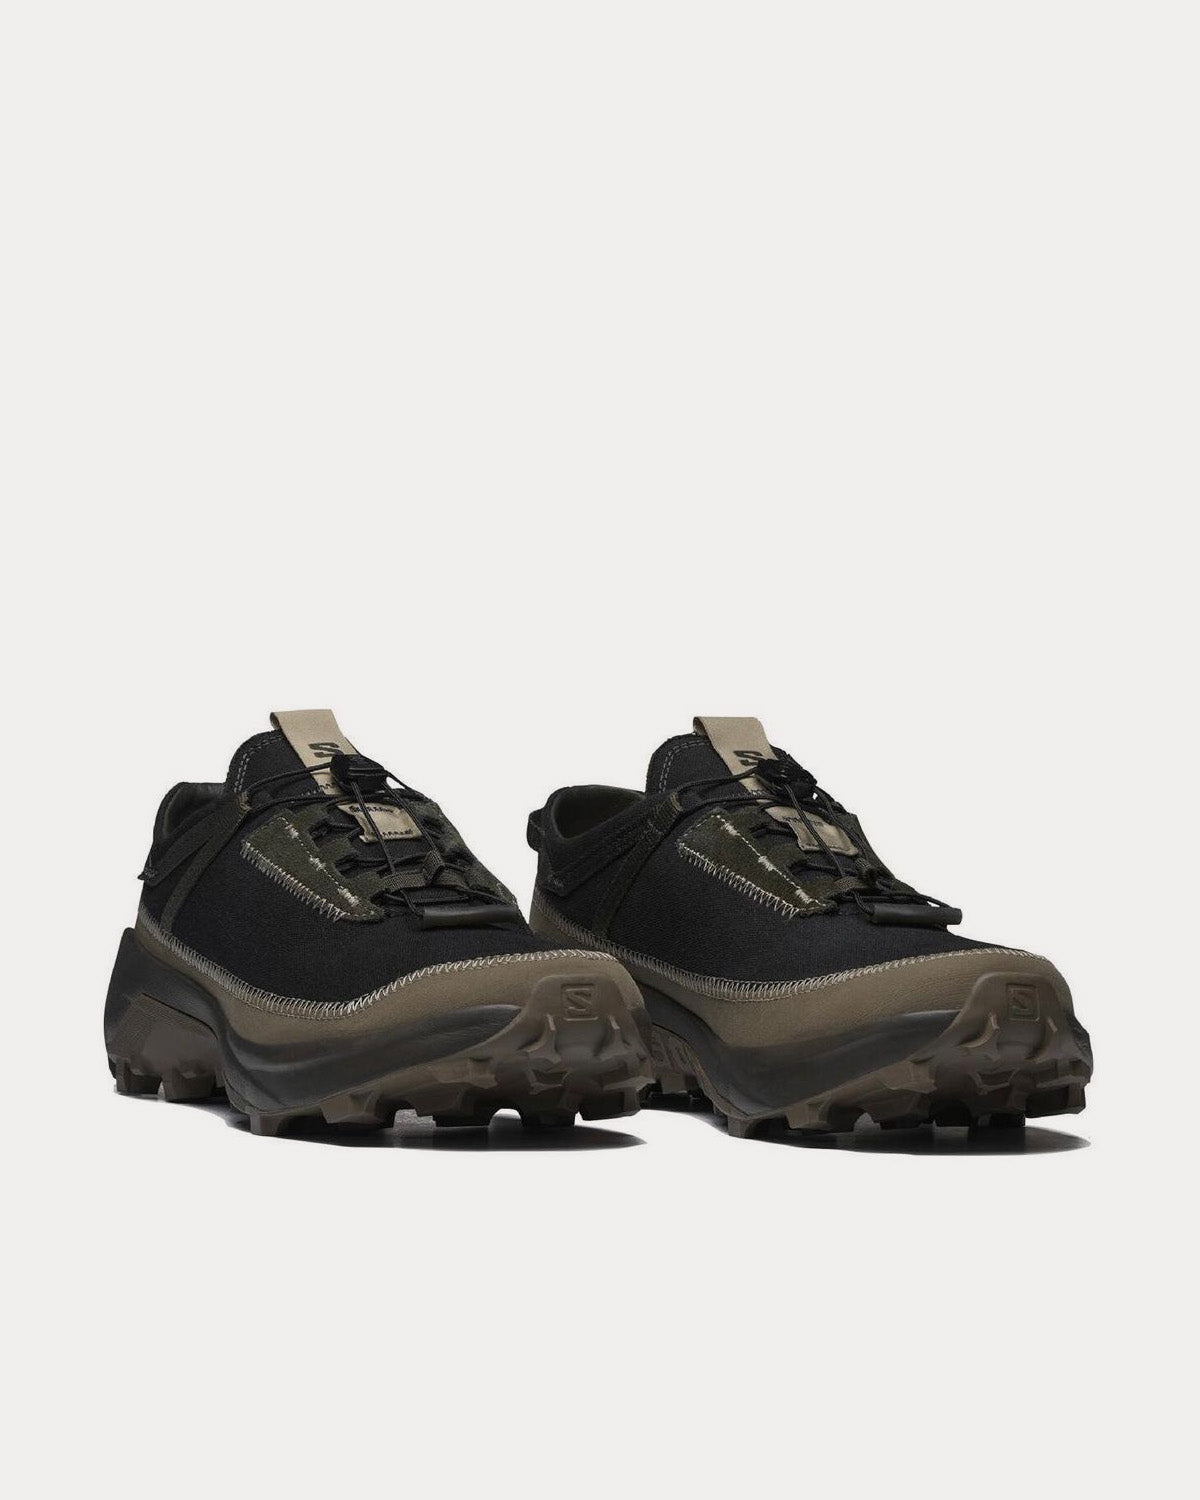 Salomon x Ranra Cross Pro Peat / Major Brown / Gum5 Running Shoes - Sneak  in Peace